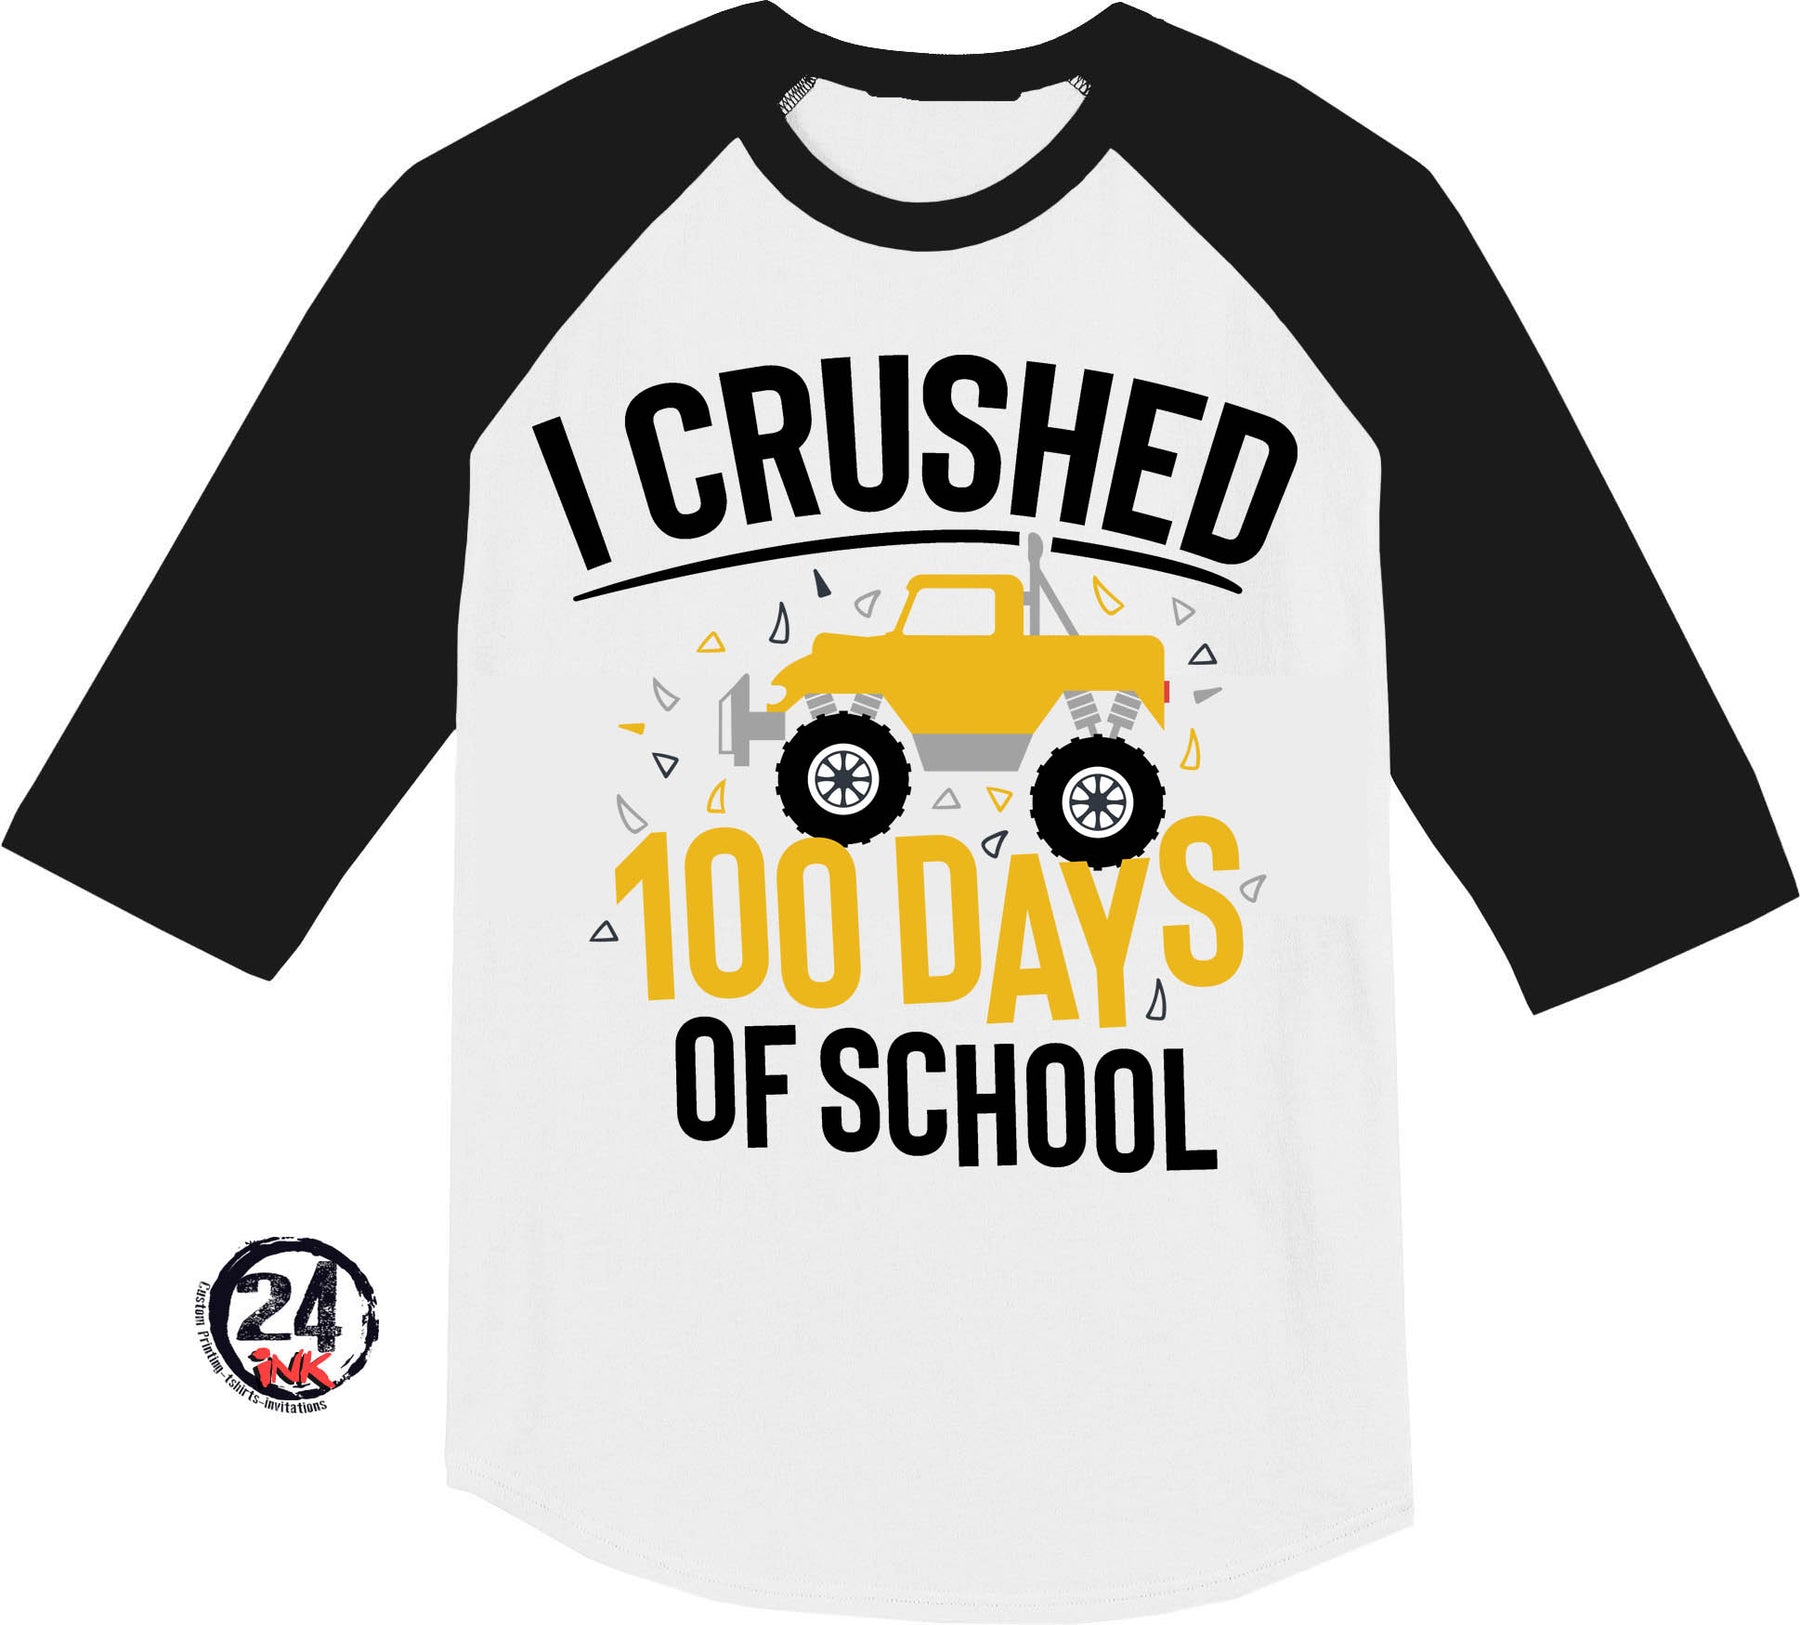 I crushed 100 days of school,  100 Days of school